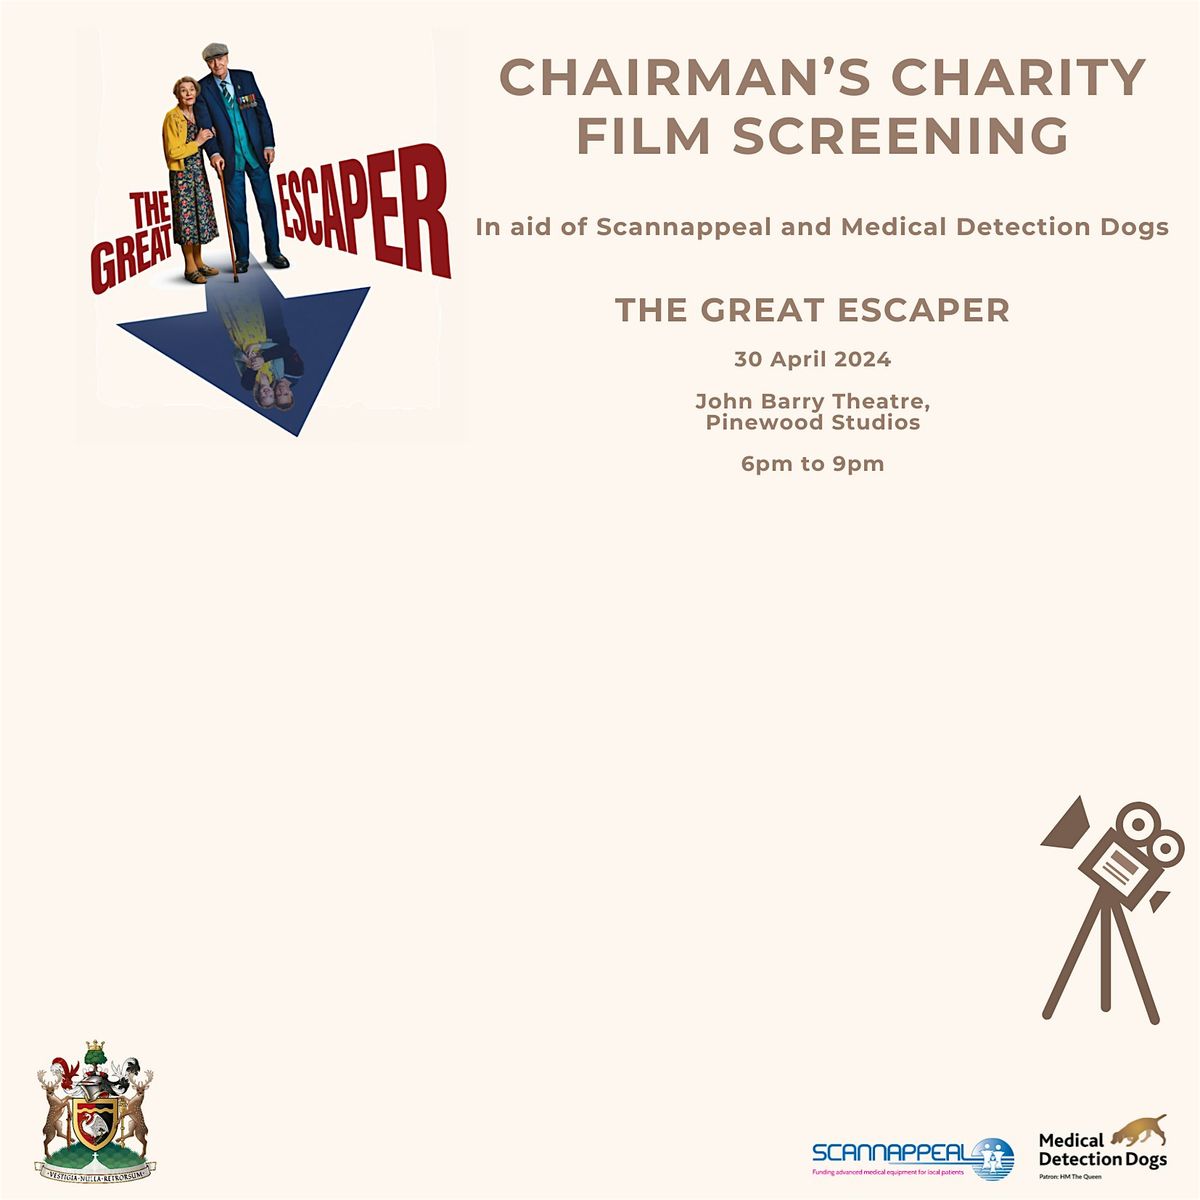 Chairman's Charity Film Screening